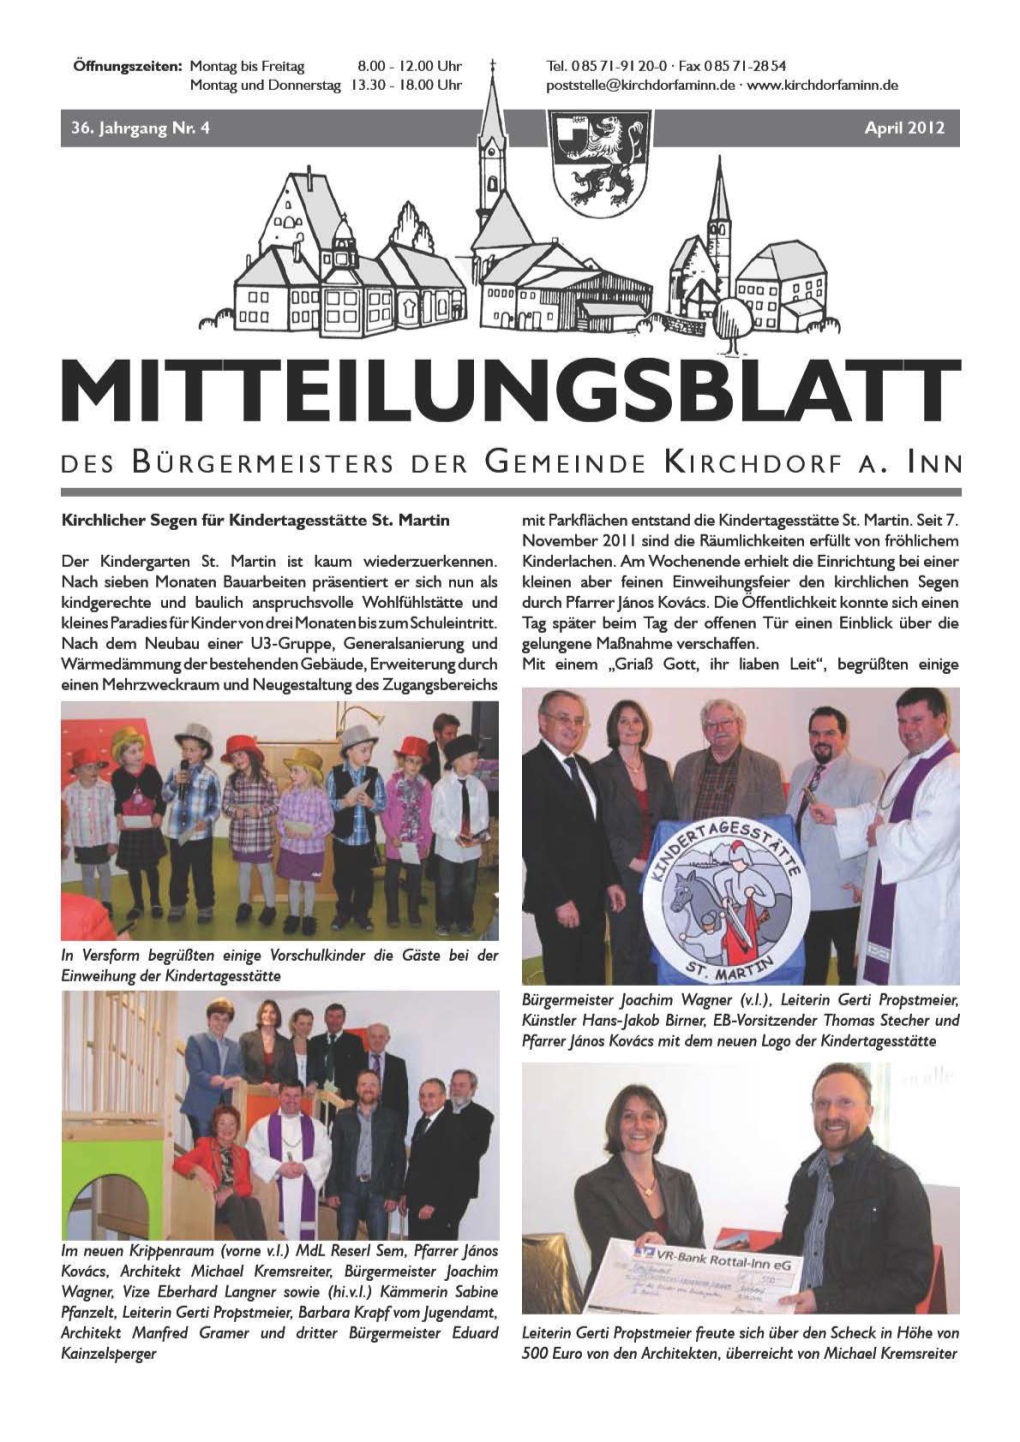 04/12 Mitteilungsblatt Des Bürgermeisters April 2012 5 MB